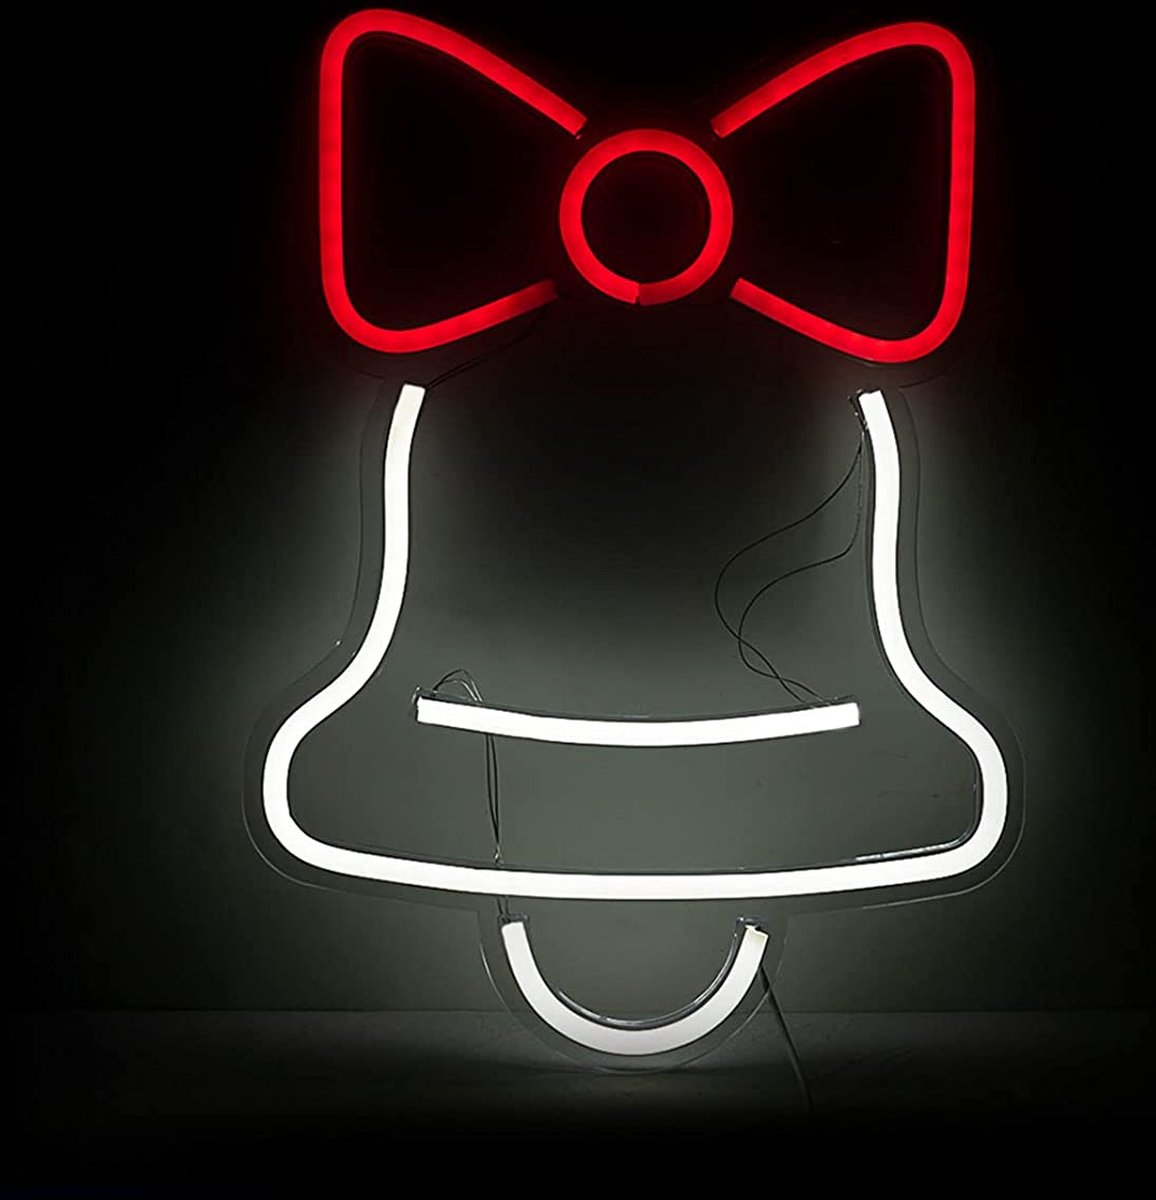 Neon led lamp - Kerstklok / Kerstbel - 39 x 29 cm - Wandlamp - Kerst - Winter - Feestdagen